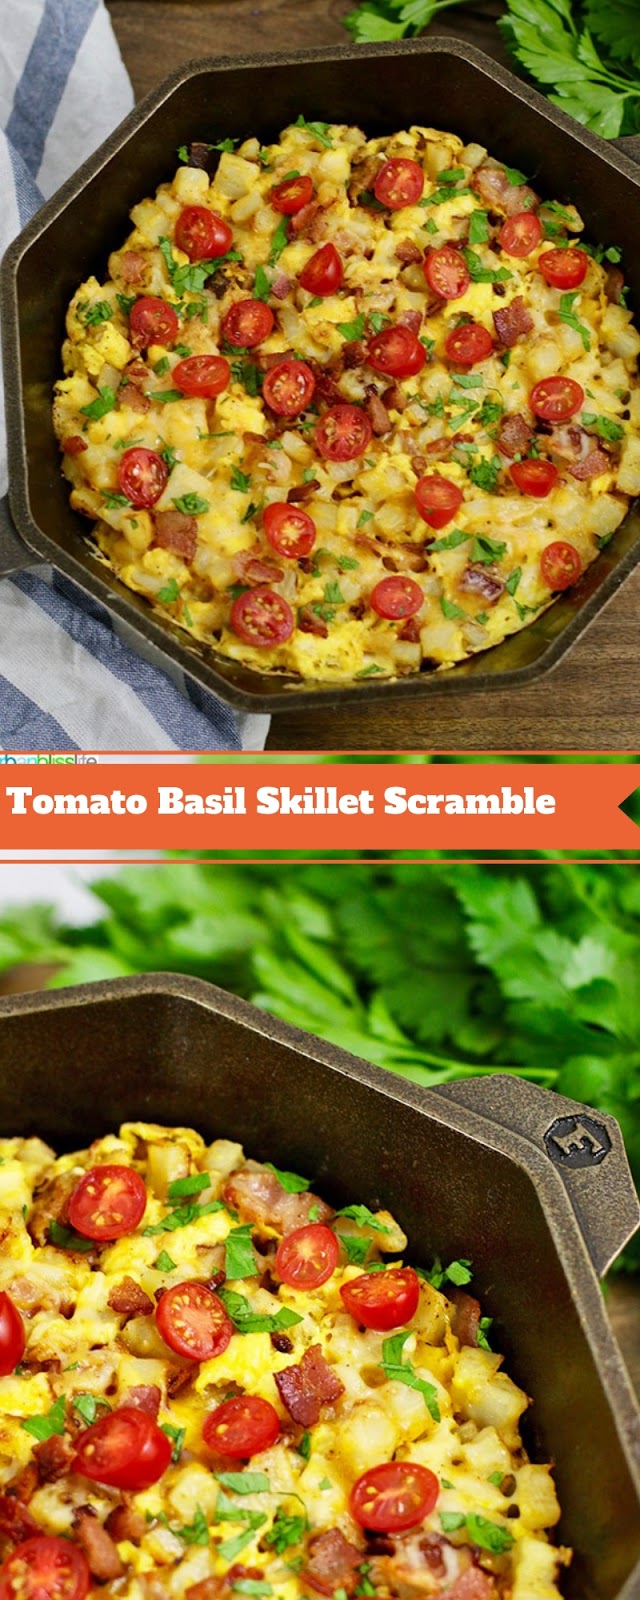 Tomato Basil Skillet Scramble